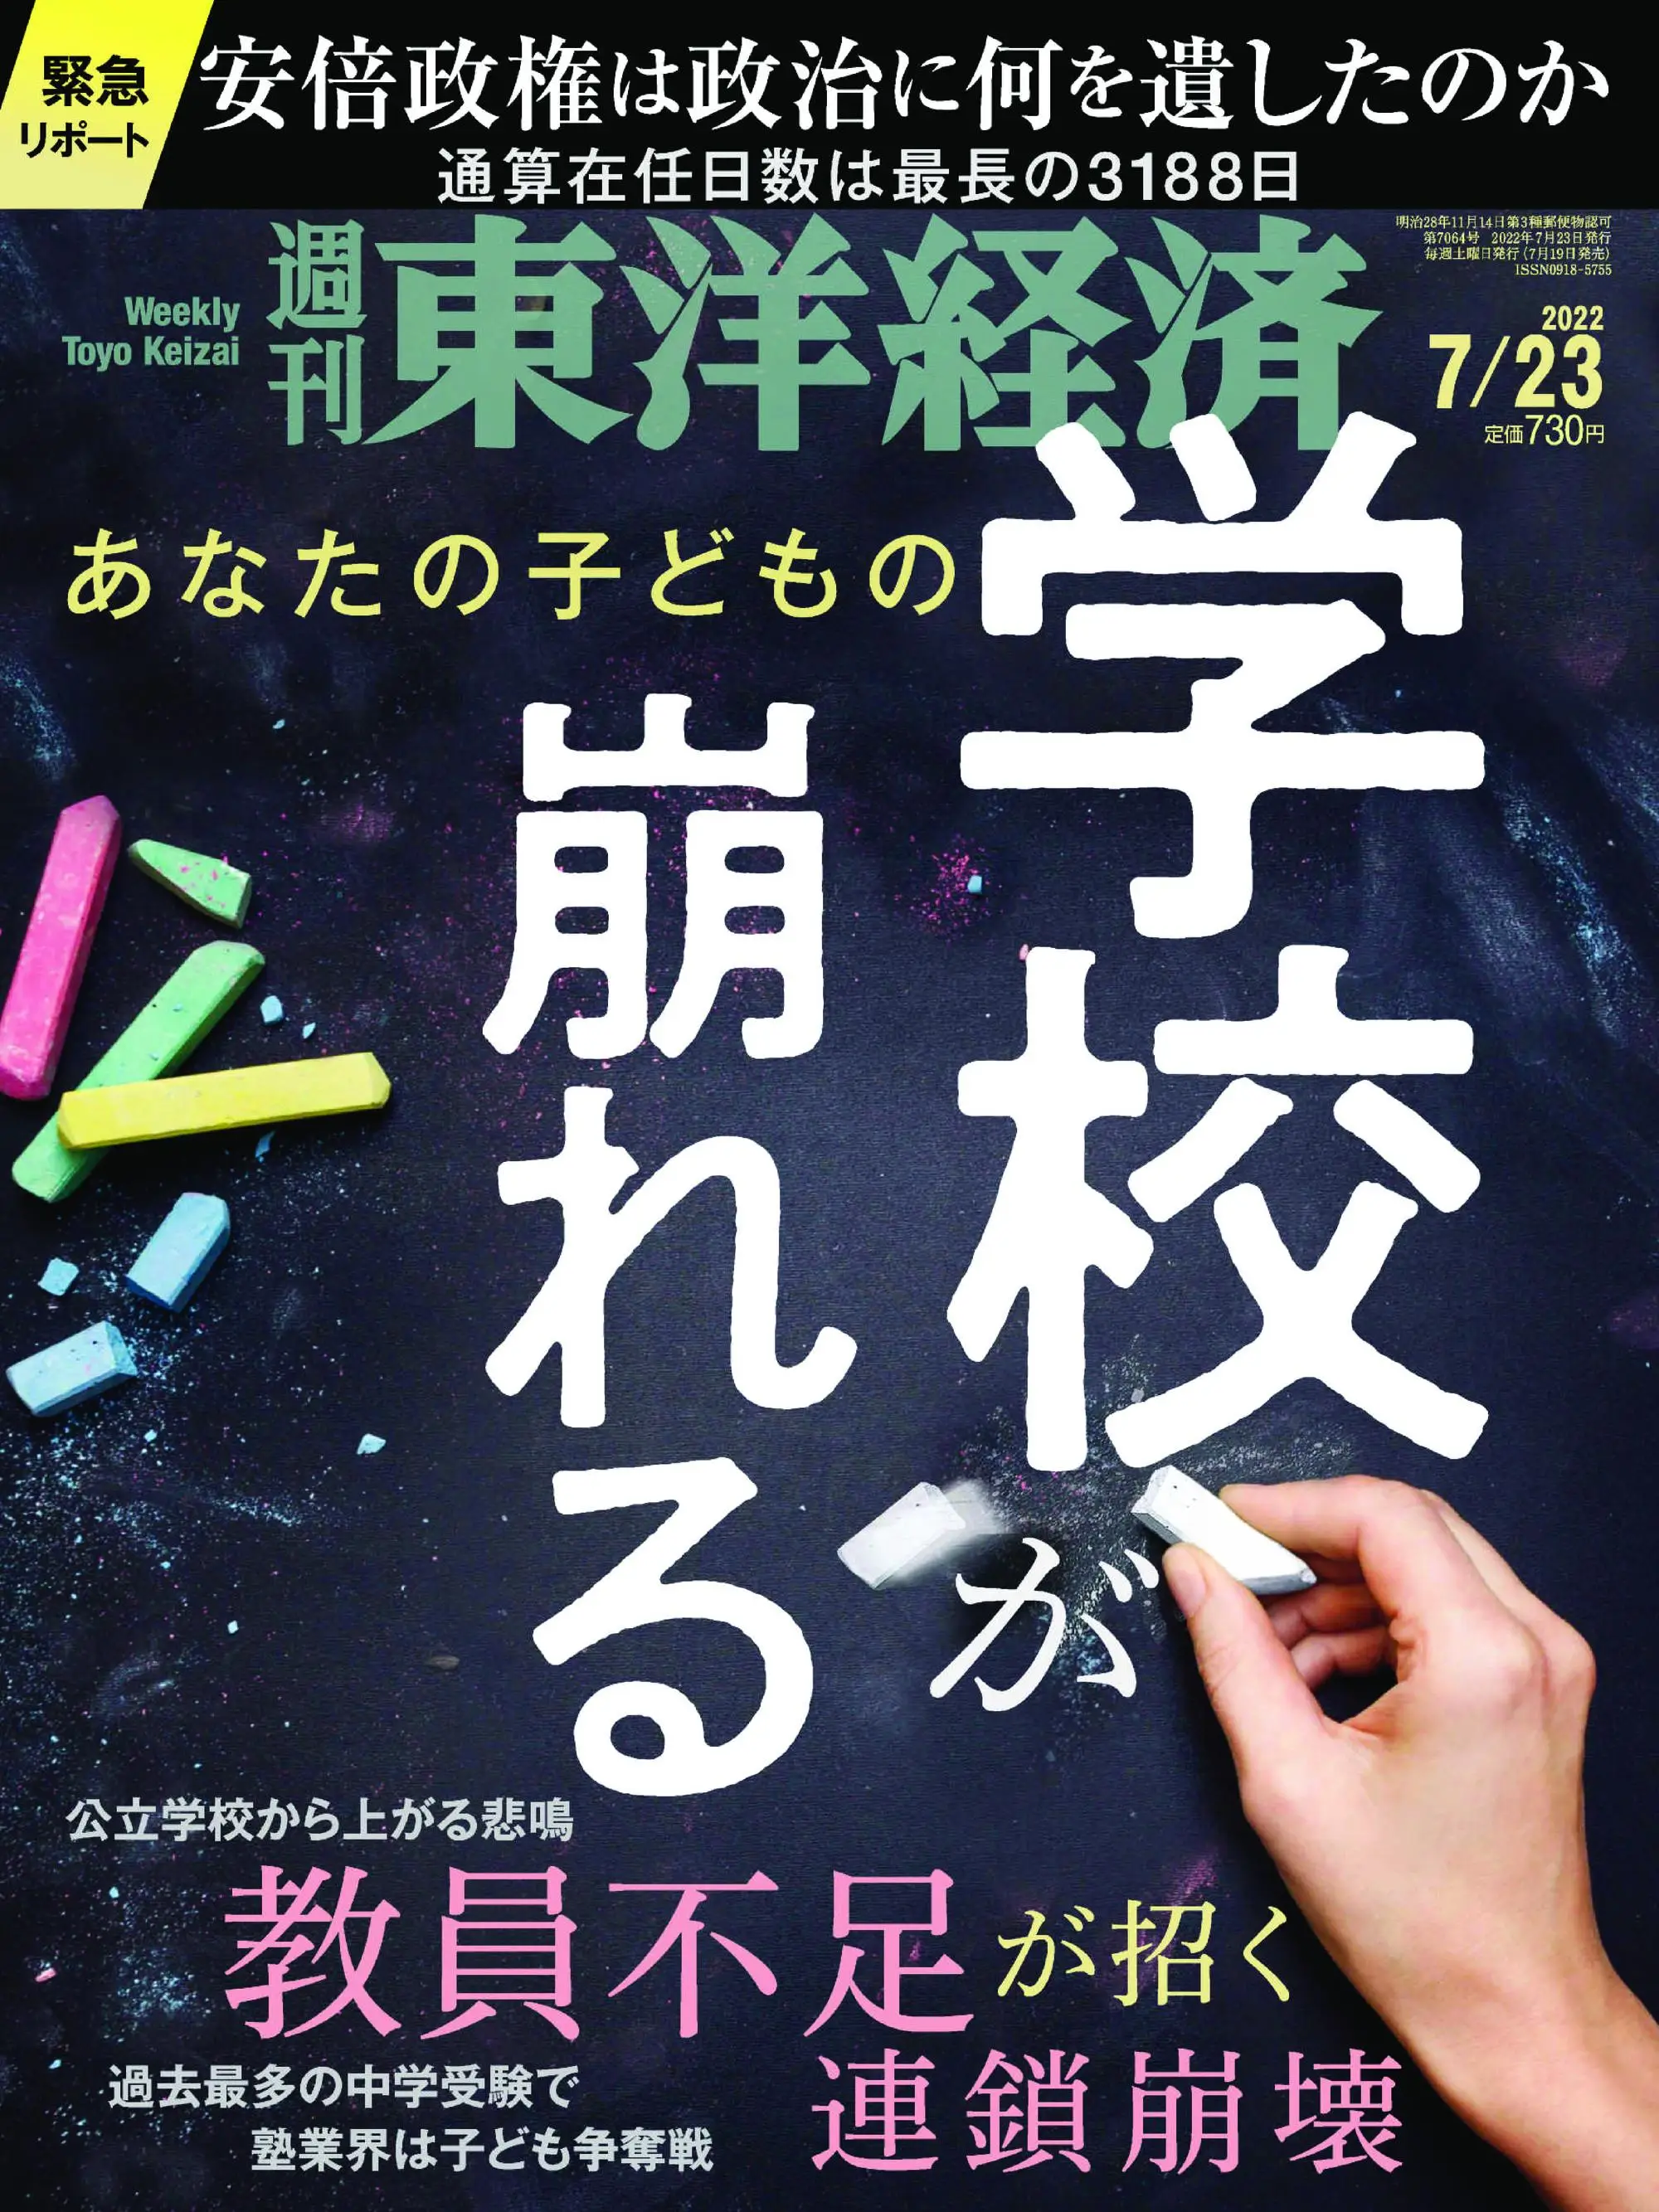 Weekly Toyo Keizai 週刊東洋経済 - 19 7月 2022